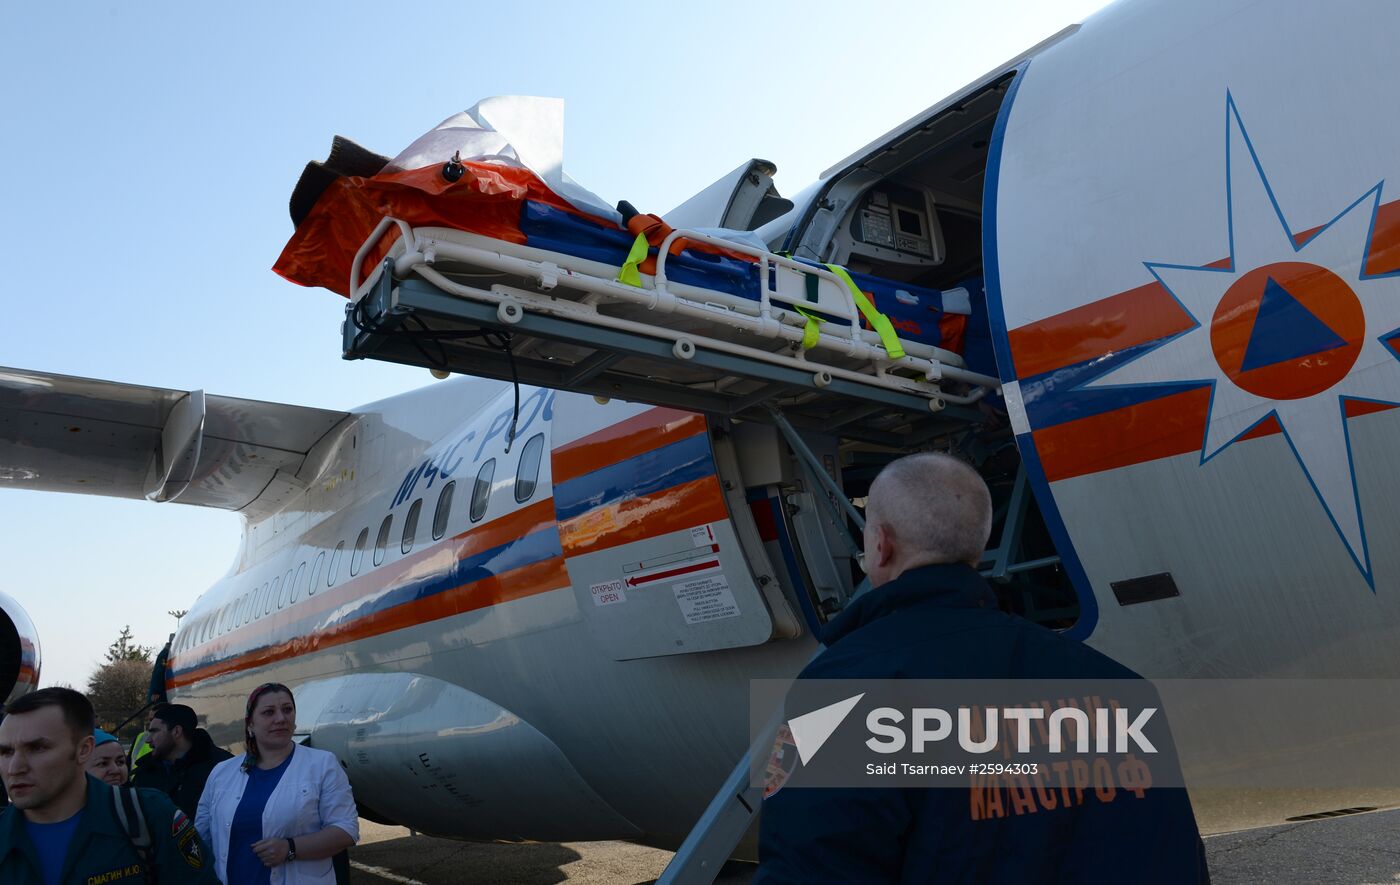 EMERCOM An-148 aircraft evacuates severly injured child